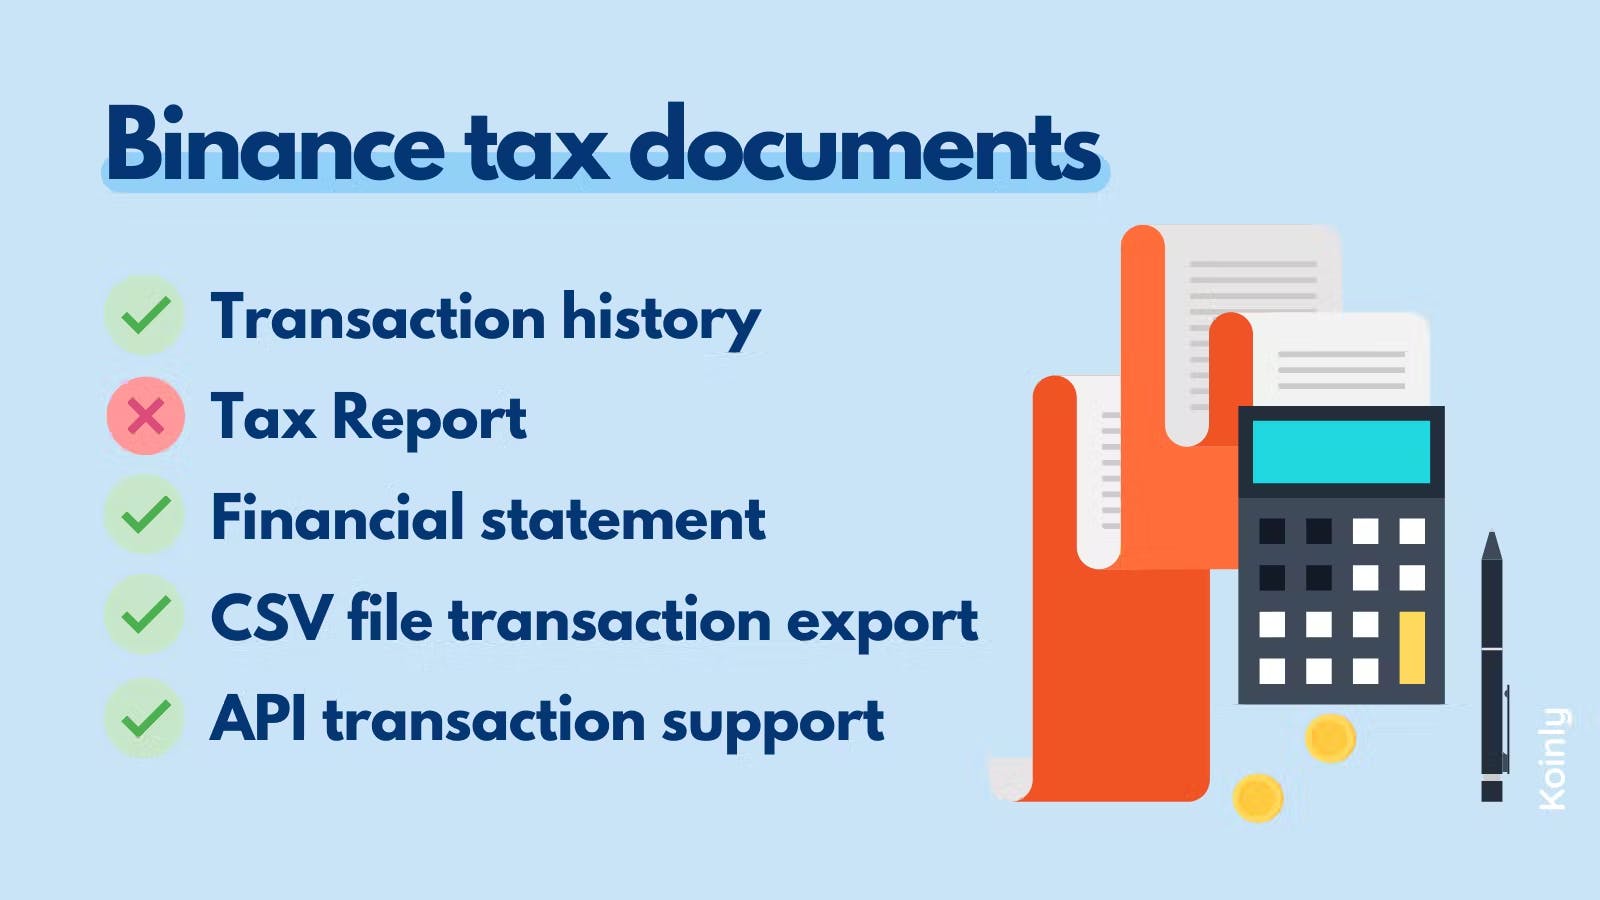 Binance tax documents